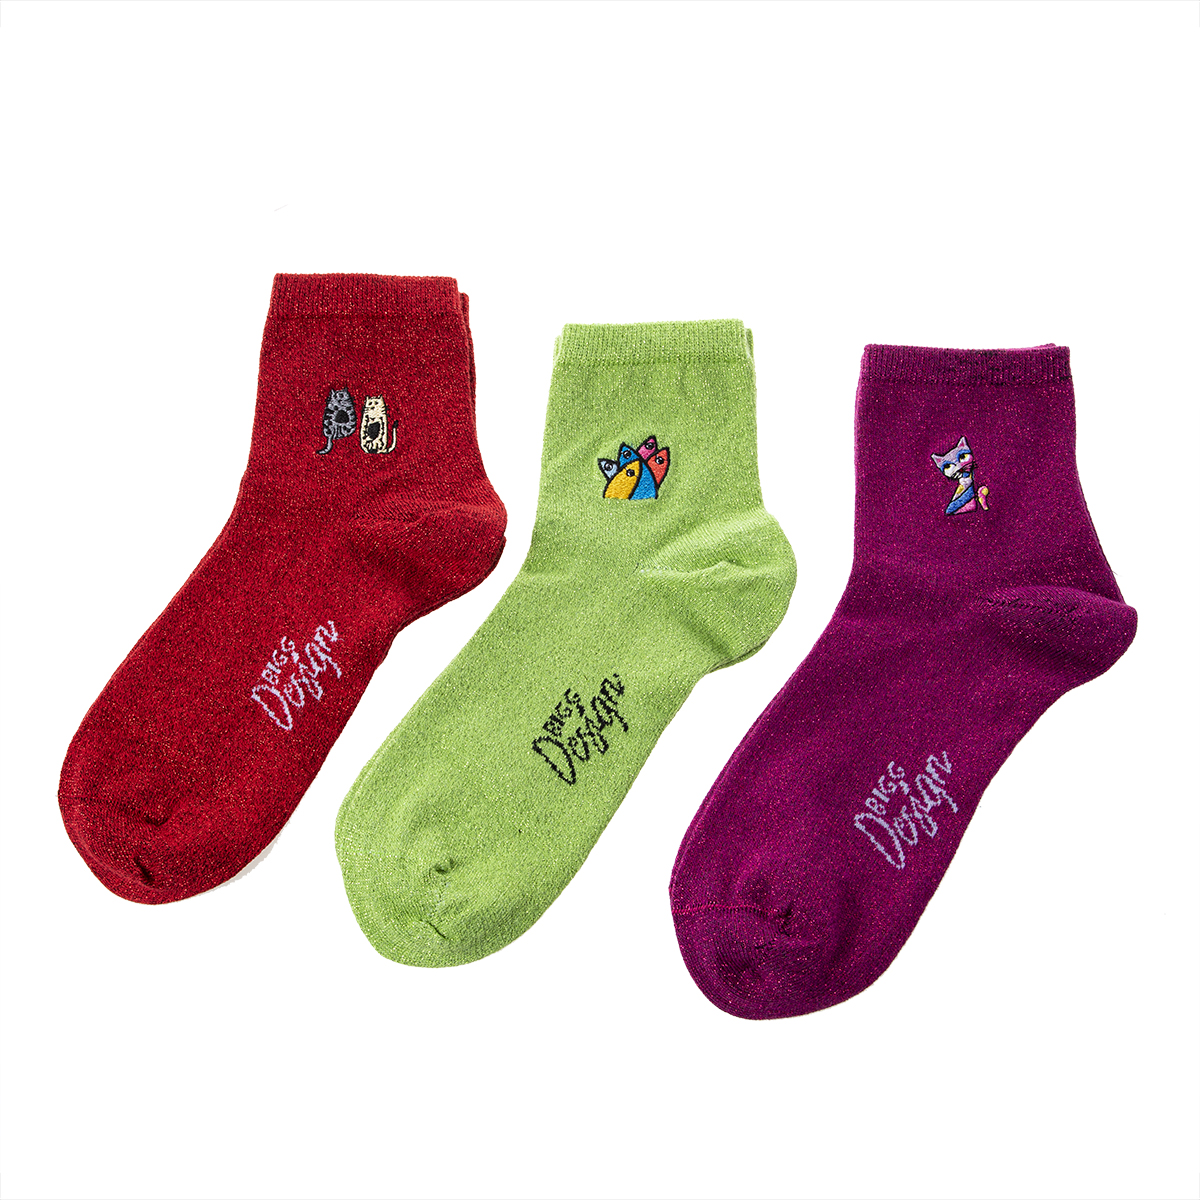 Biggdesign Women's Socks Set, Cotton Super Soft Casual Socks, Shiny Pearl Colorful Crew, Low Cut, Ankle, Quarter Socks, Multipack Bulk Socks, 3 Pairs